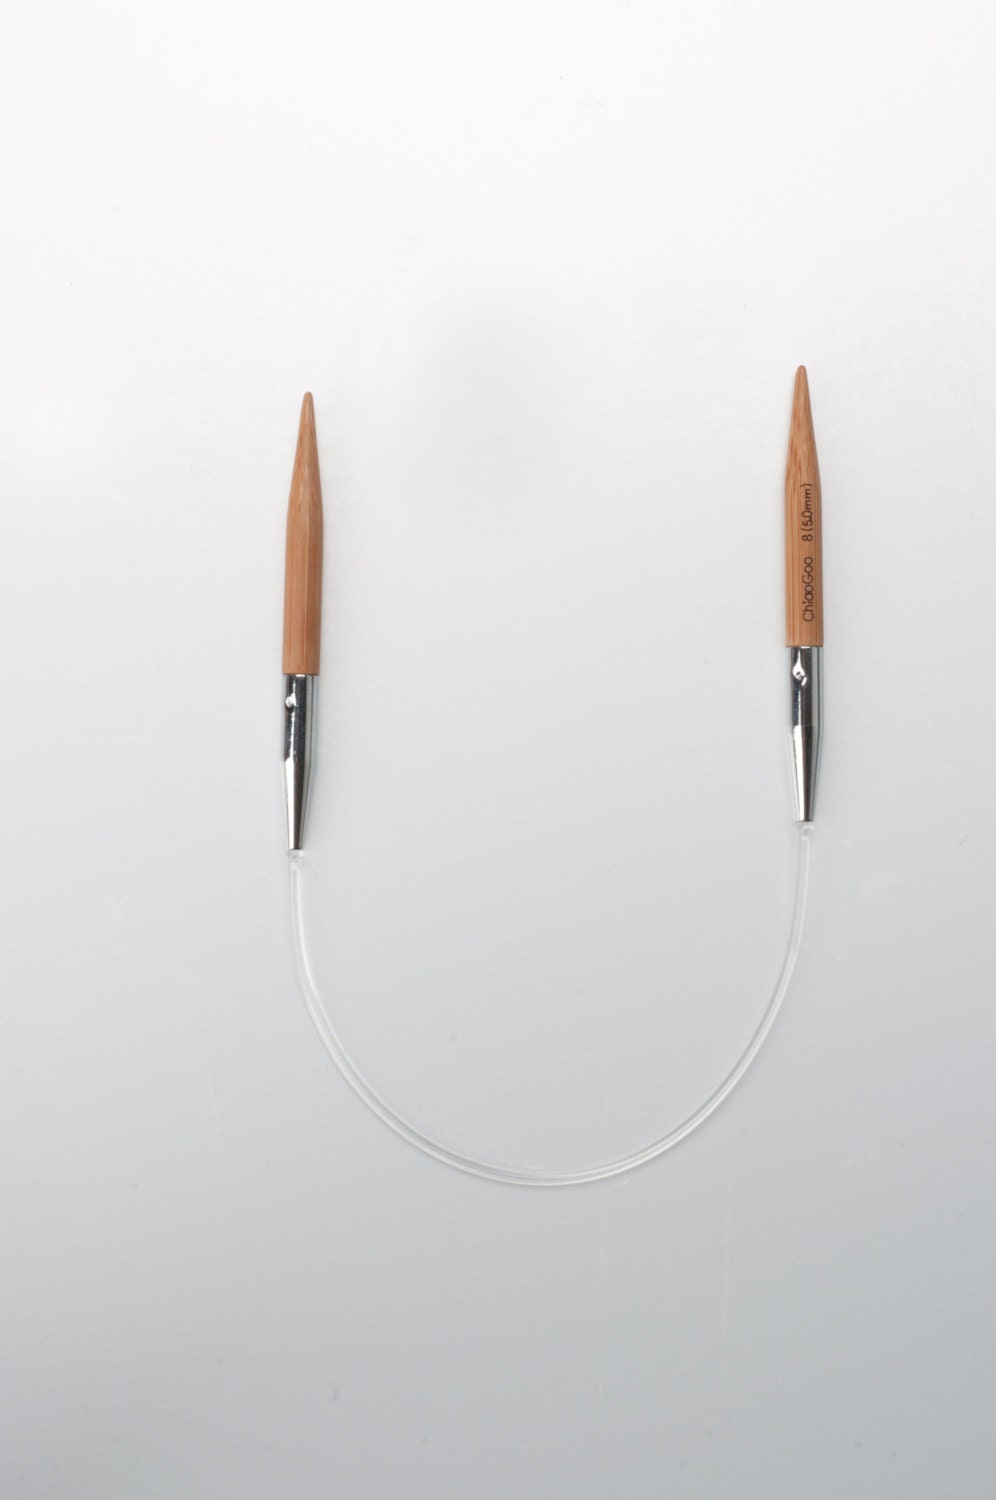 ChiaoGoo Bamboo 9 inch (23 cm) US 2.5 (3.00mm) Circular Knitting Needles